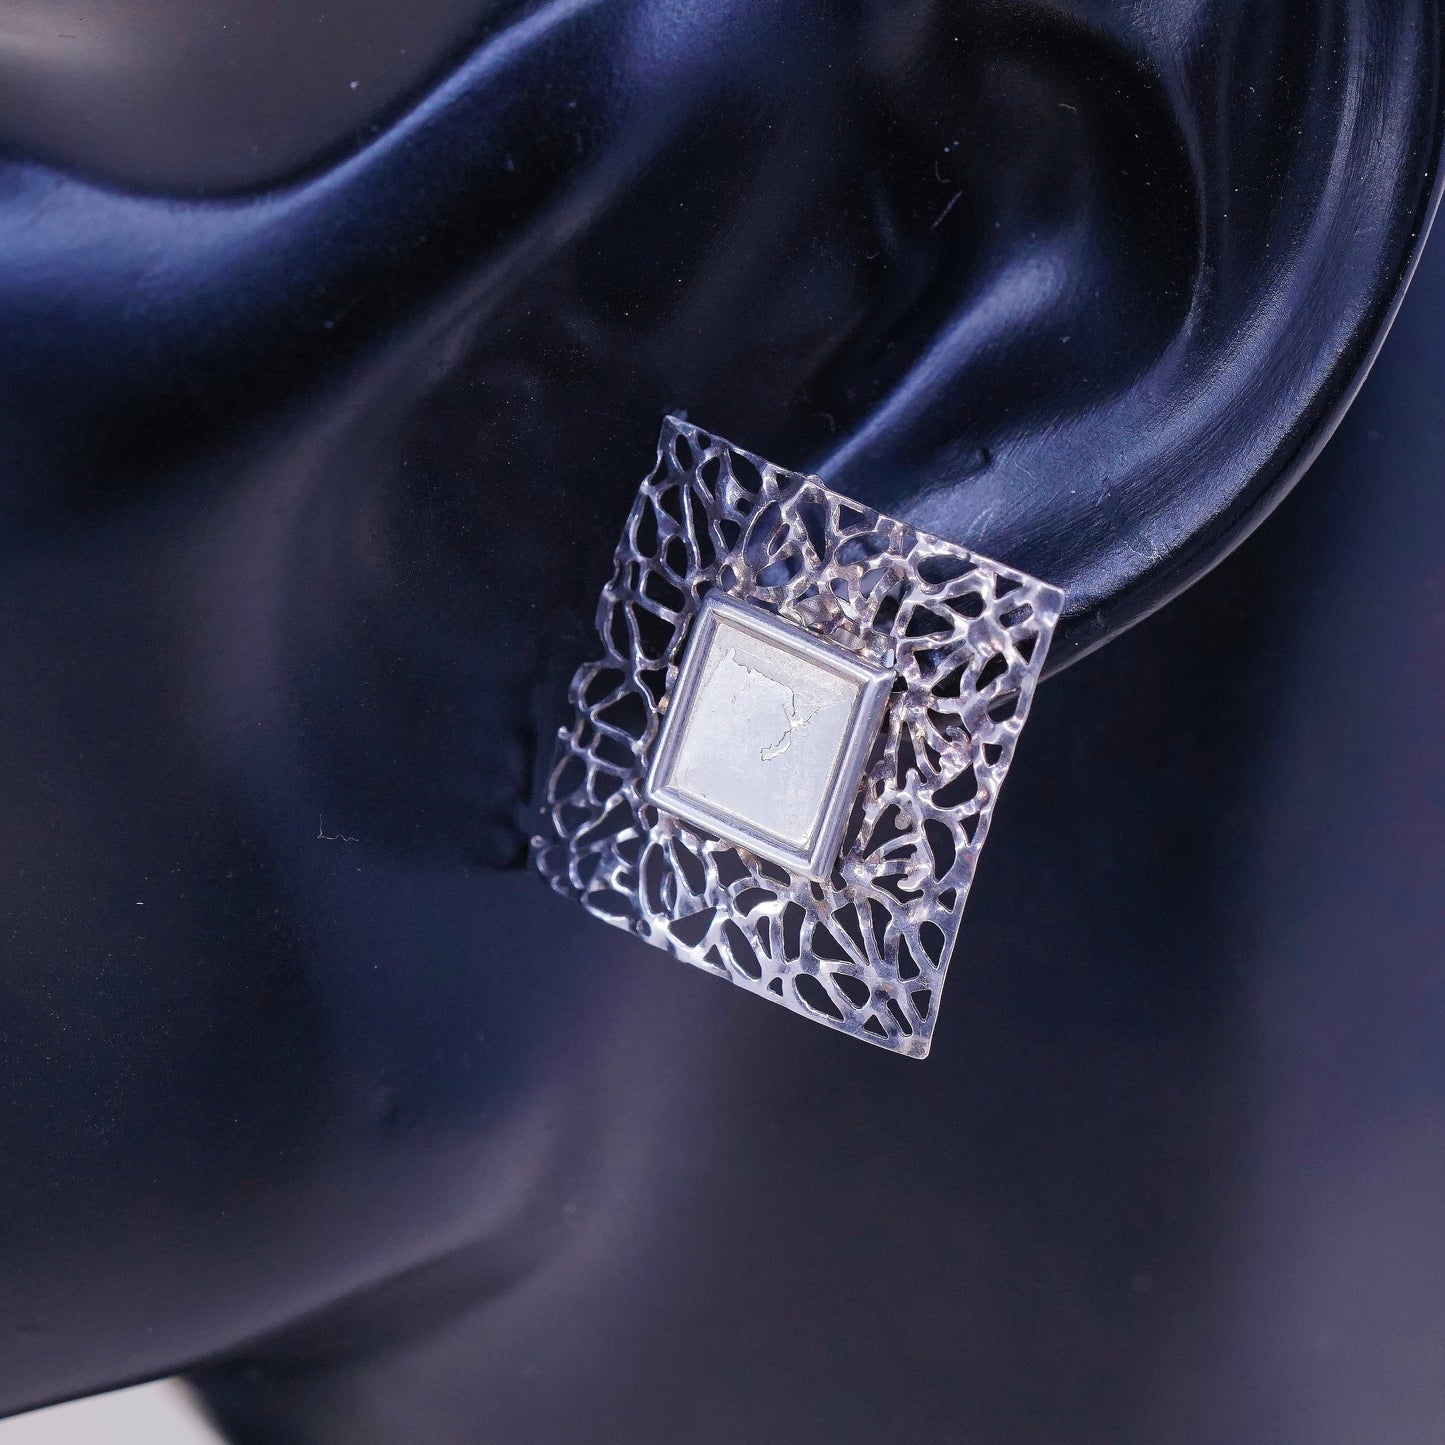 Vintage Sterling silver handmade earrings, 925 studs with filigree details